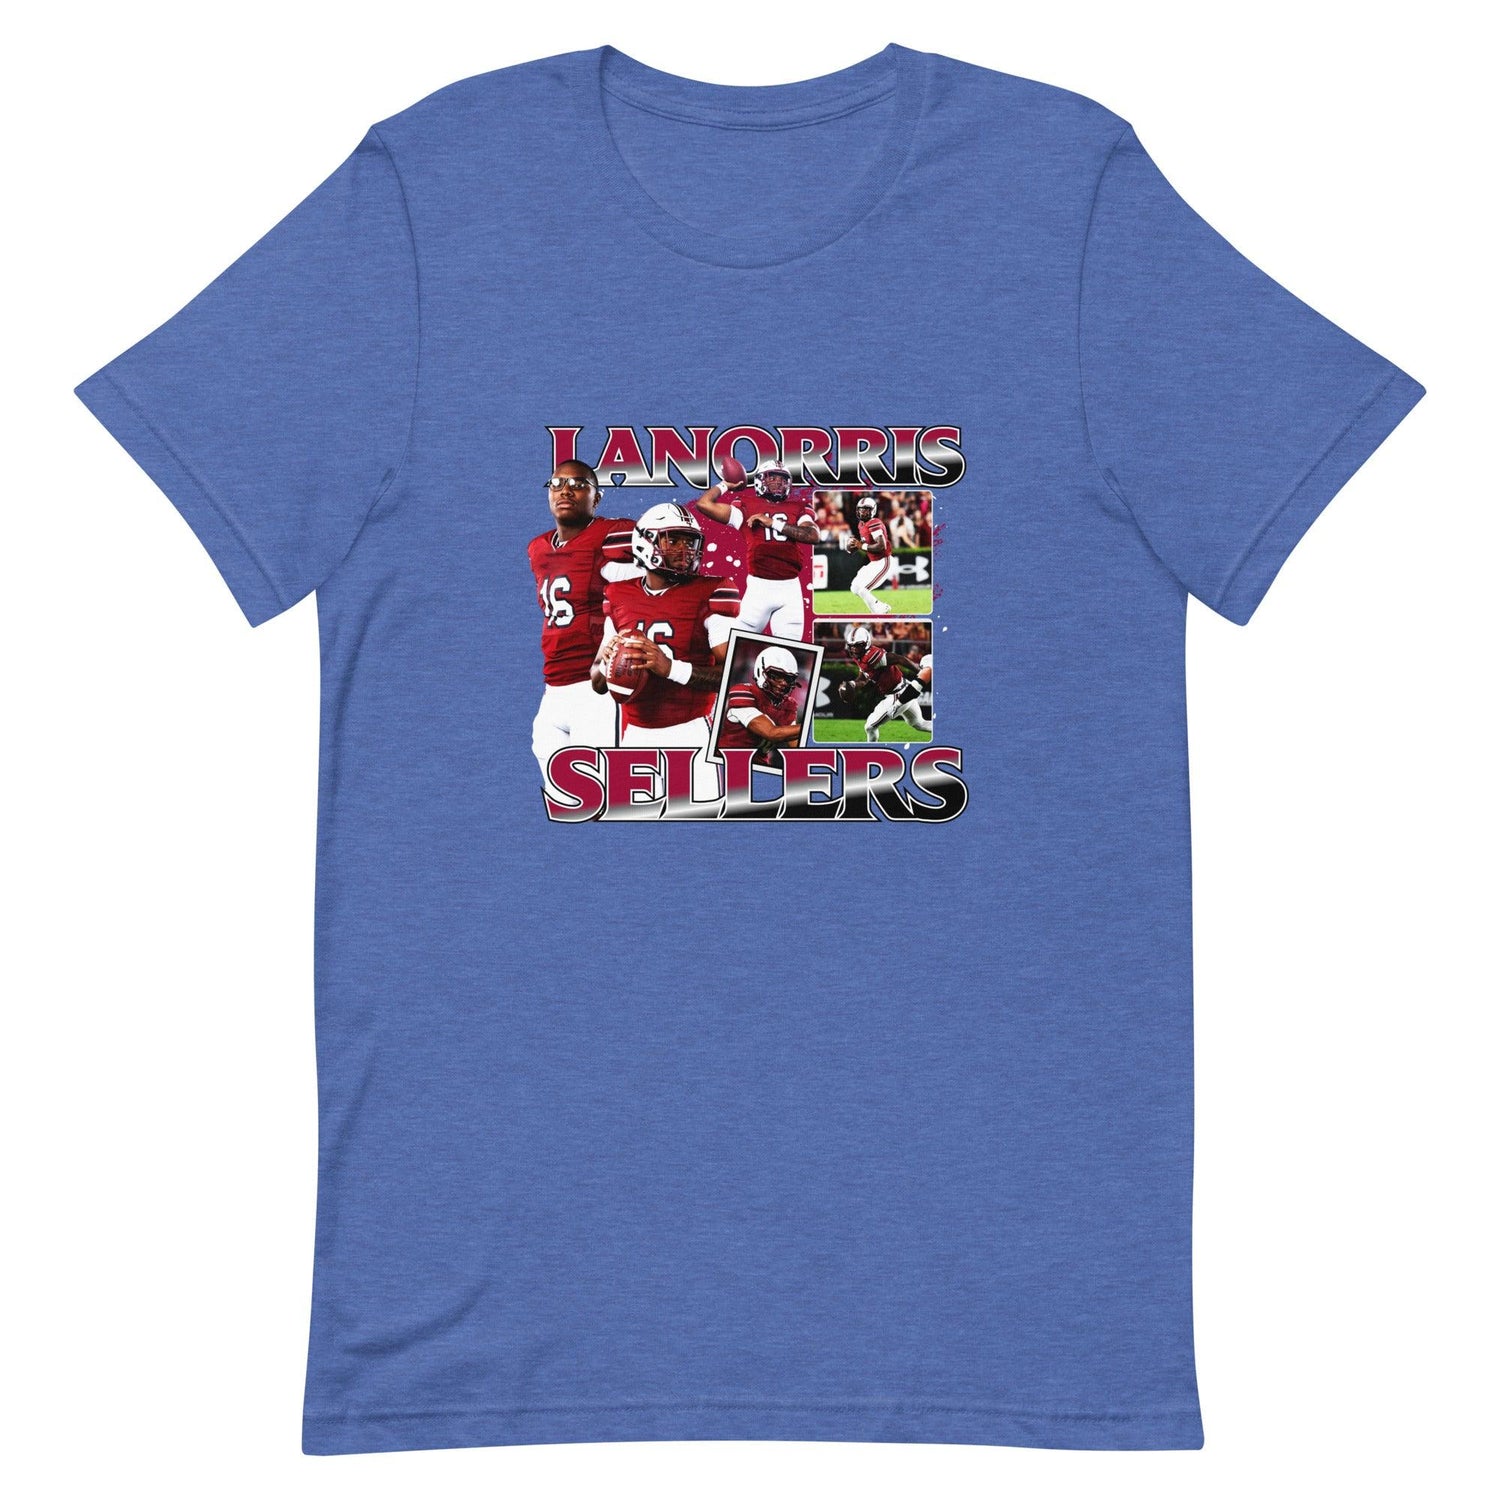 Lanorris Sellers "Vintage" t-shirt - Fan Arch